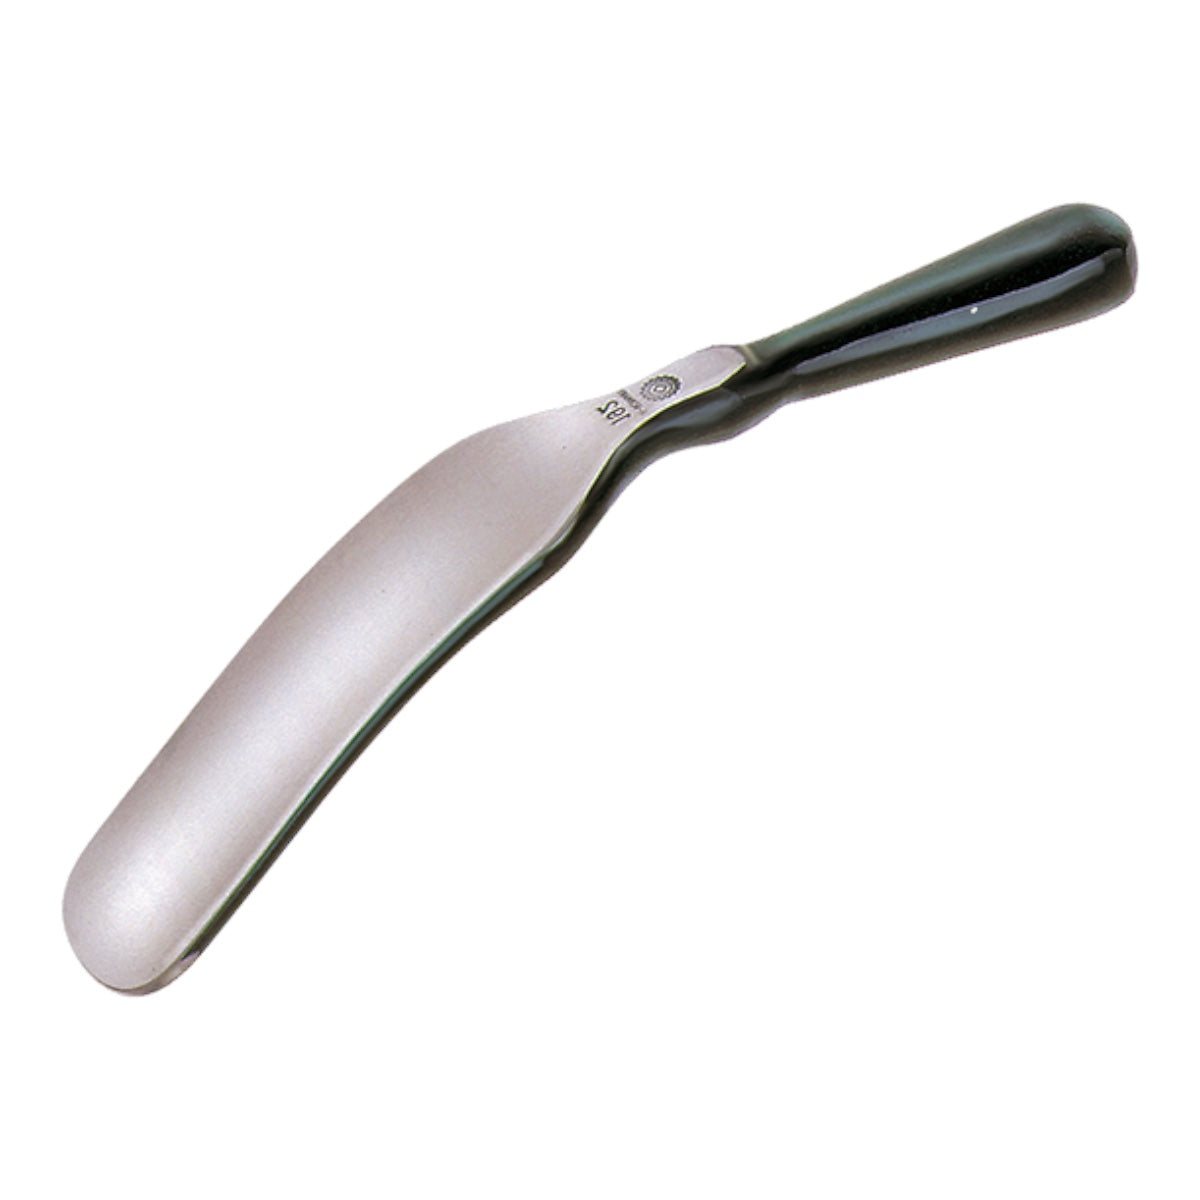 Spoon iron curved, flat shape